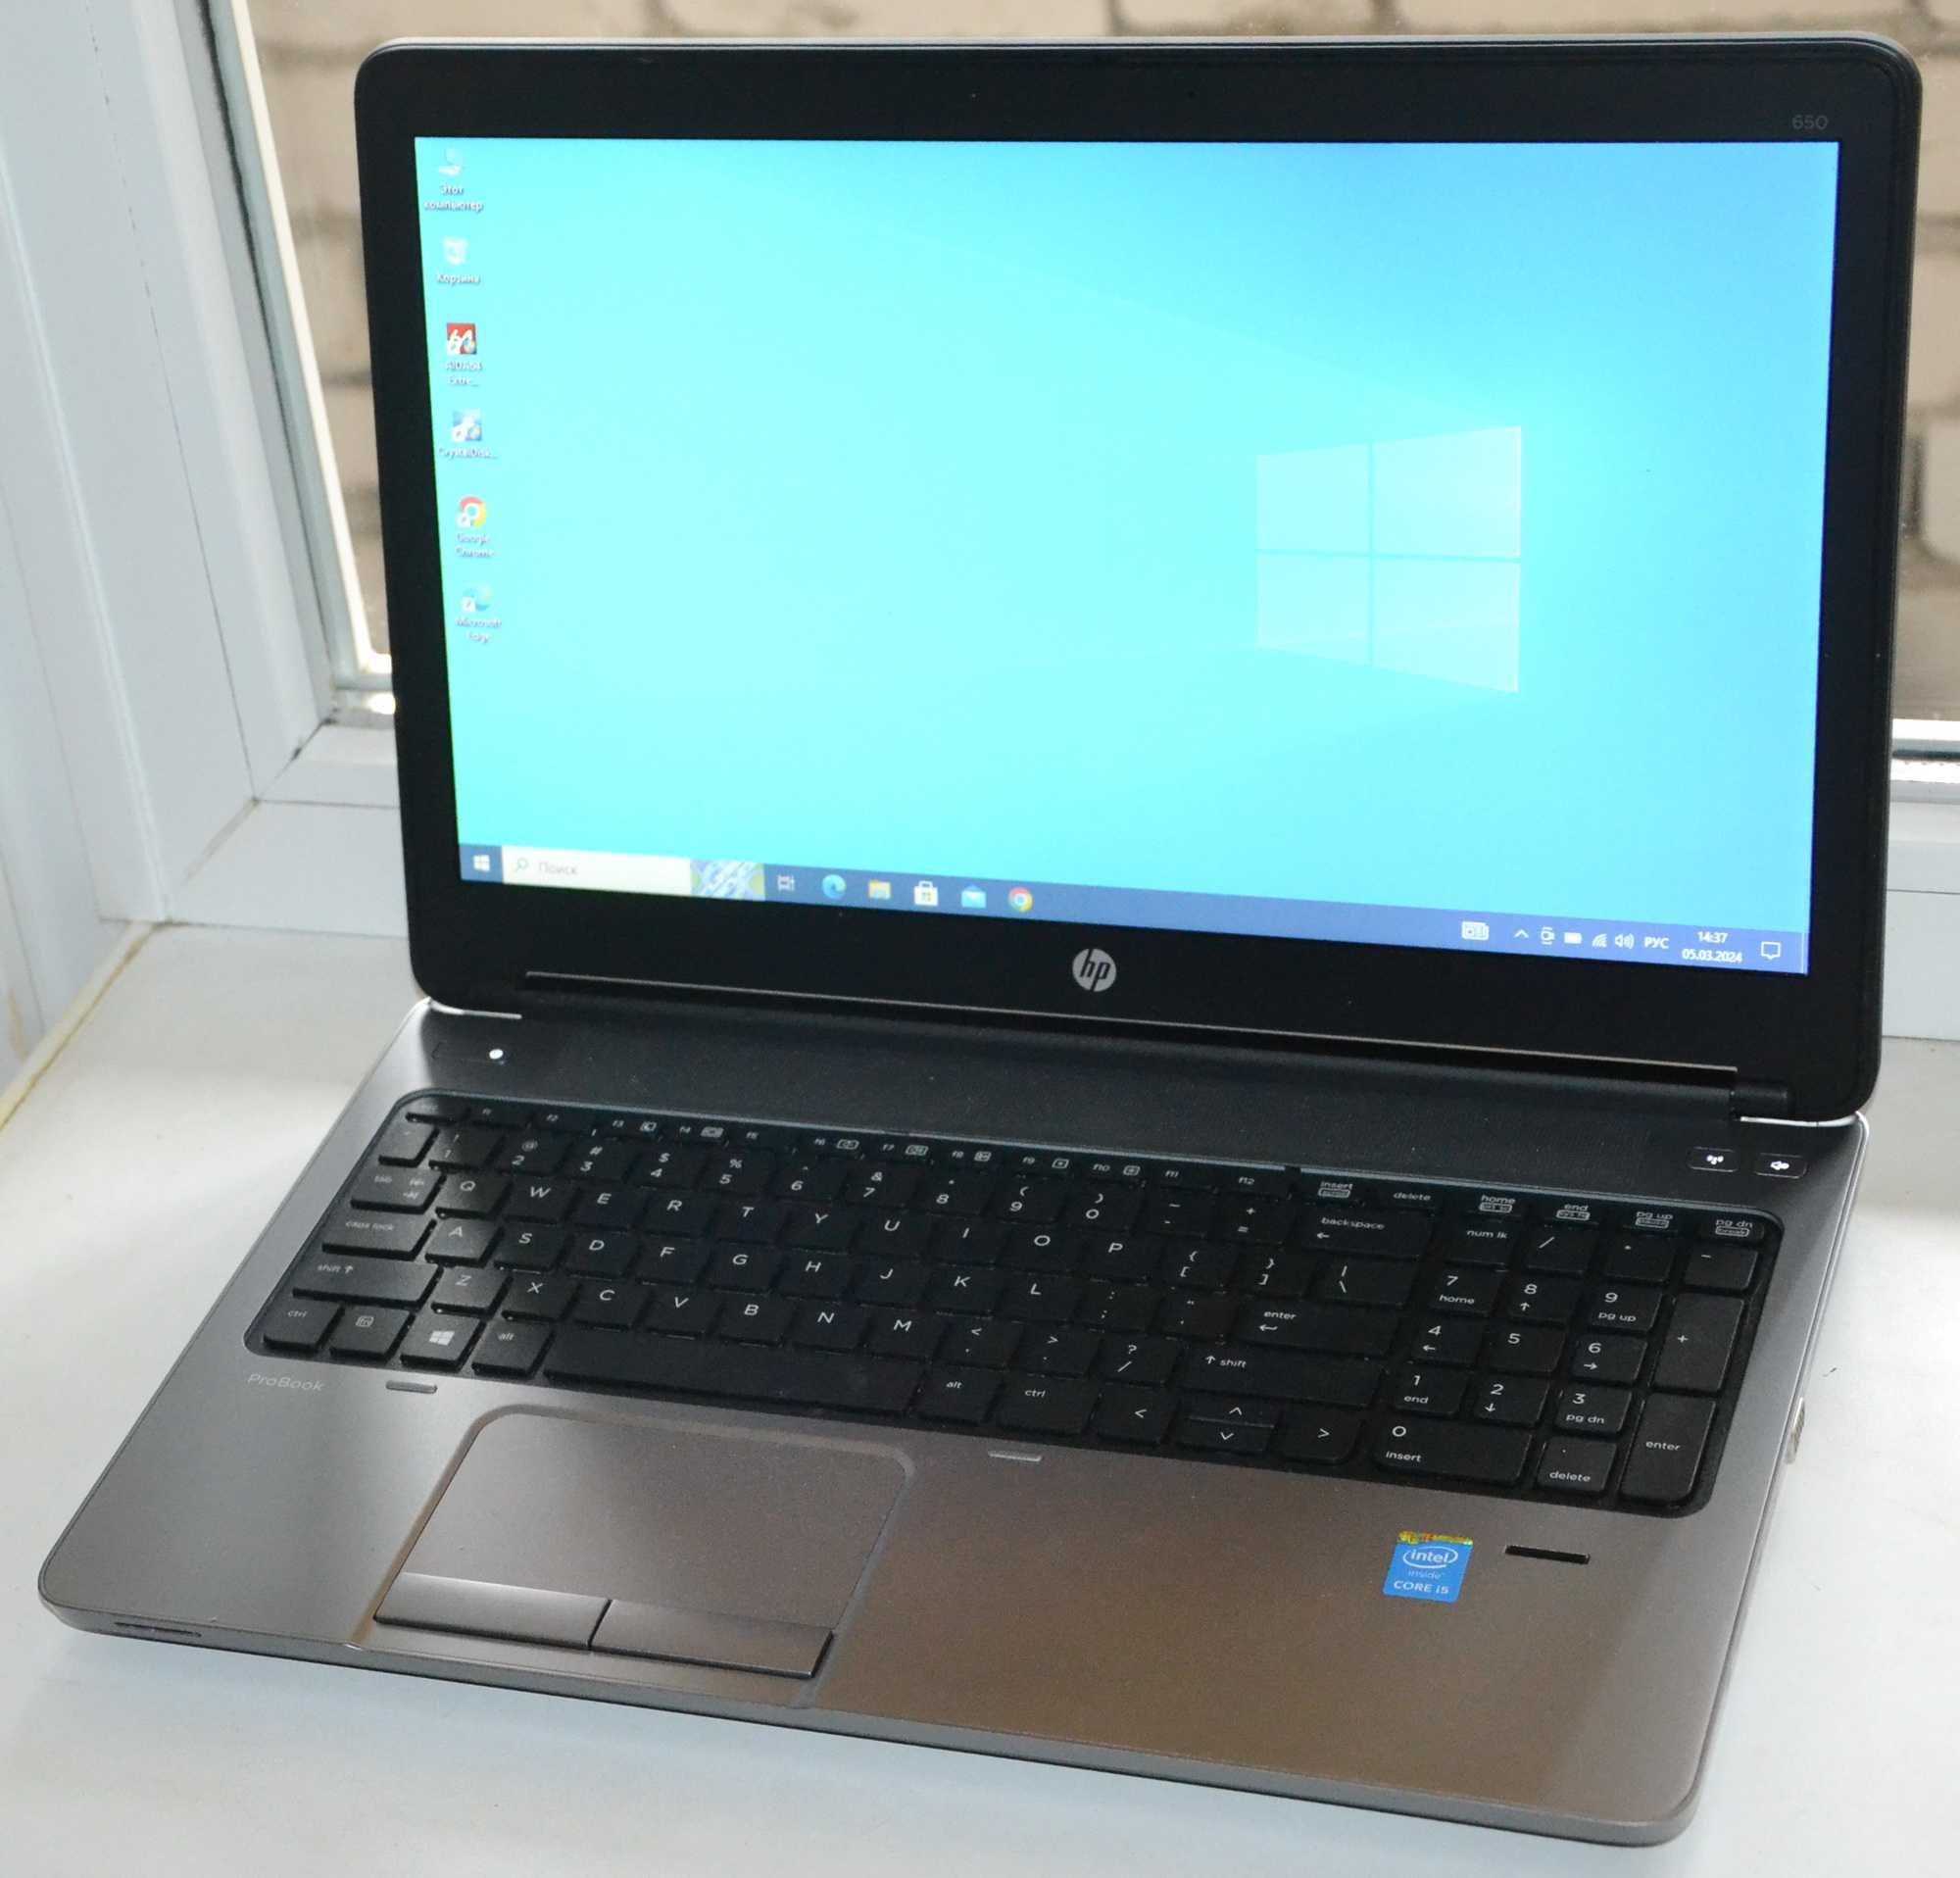 Ноутбук HP ProBook 650 G1 i5-4300m 2.6GHz 8Gb/SSD 256Gb 15.6"